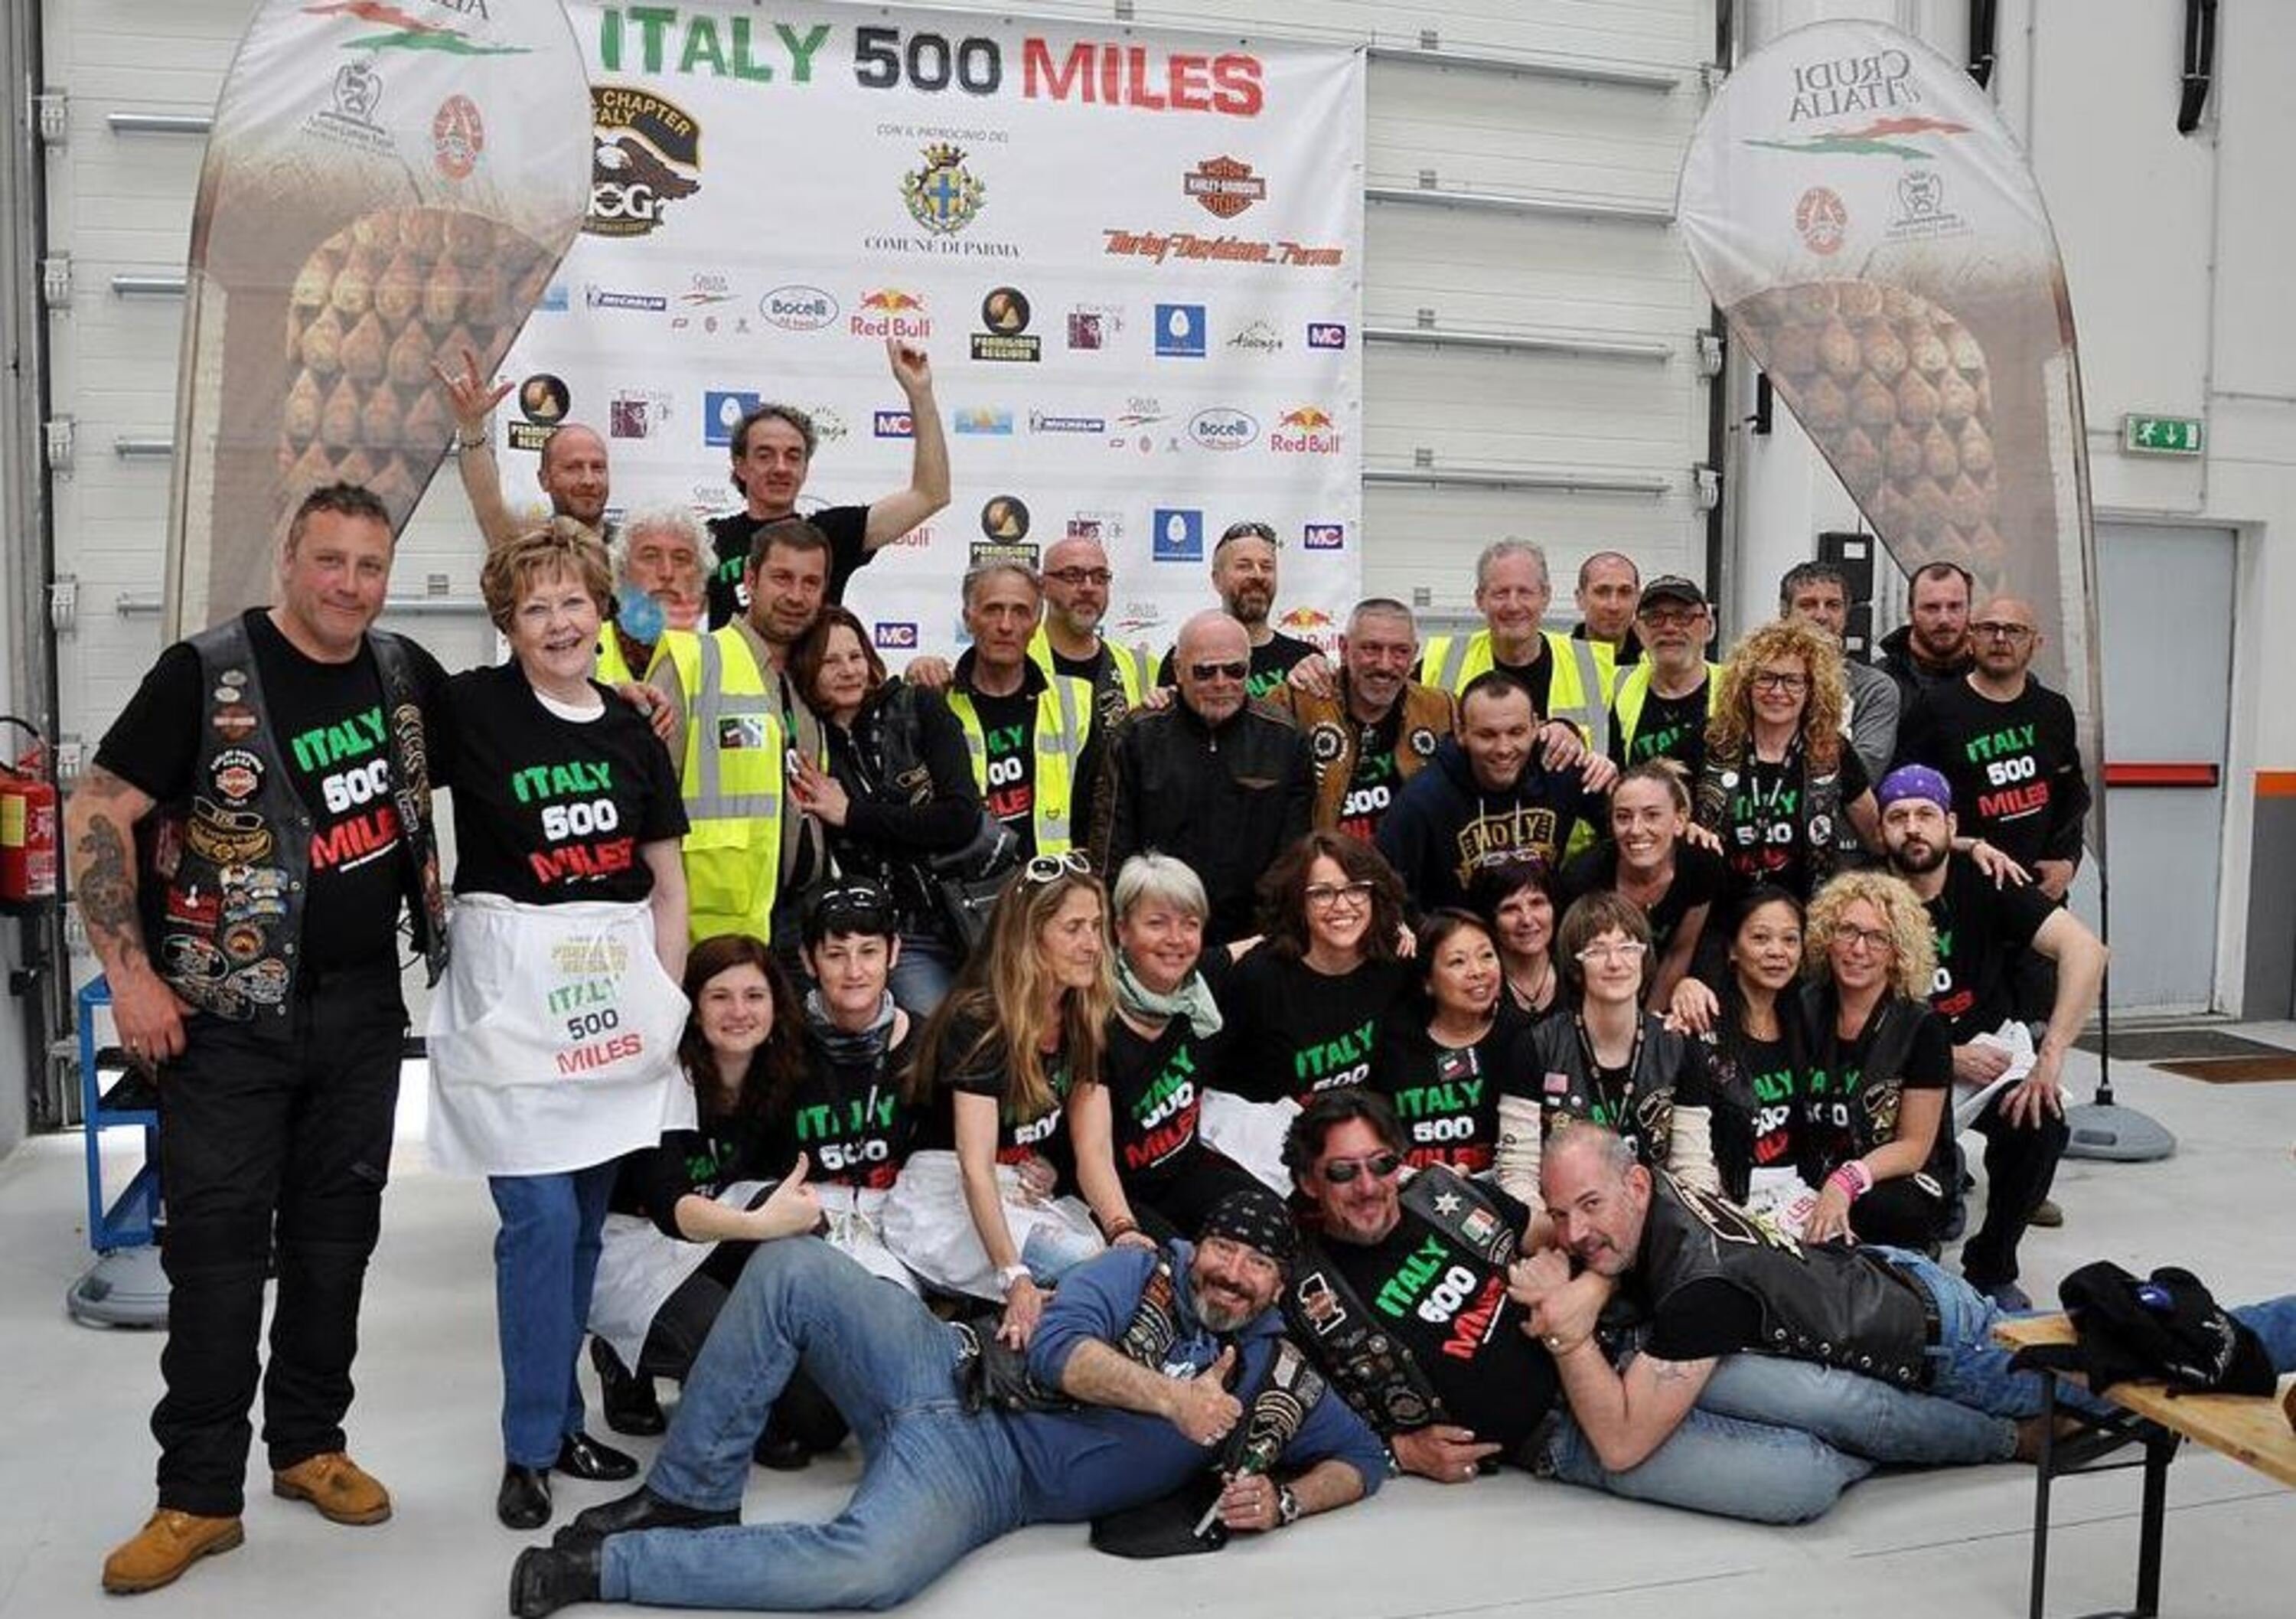 Harley-Davidson Parma e la 2a &ldquo;Italy 500 Miles&rdquo;